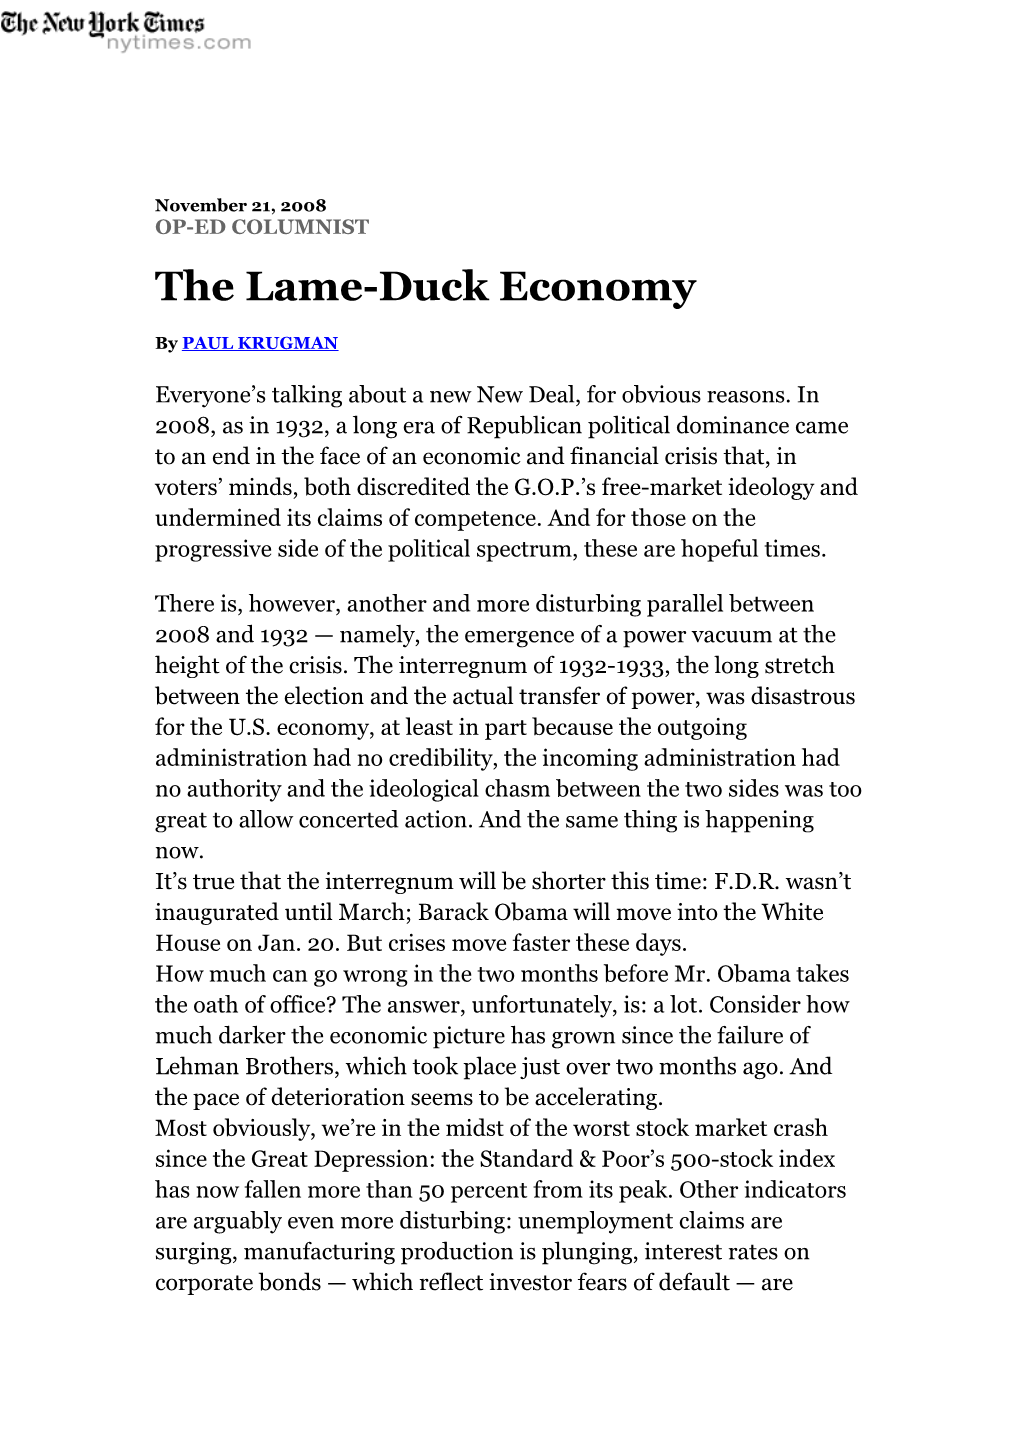 The Lame-Duck Economy